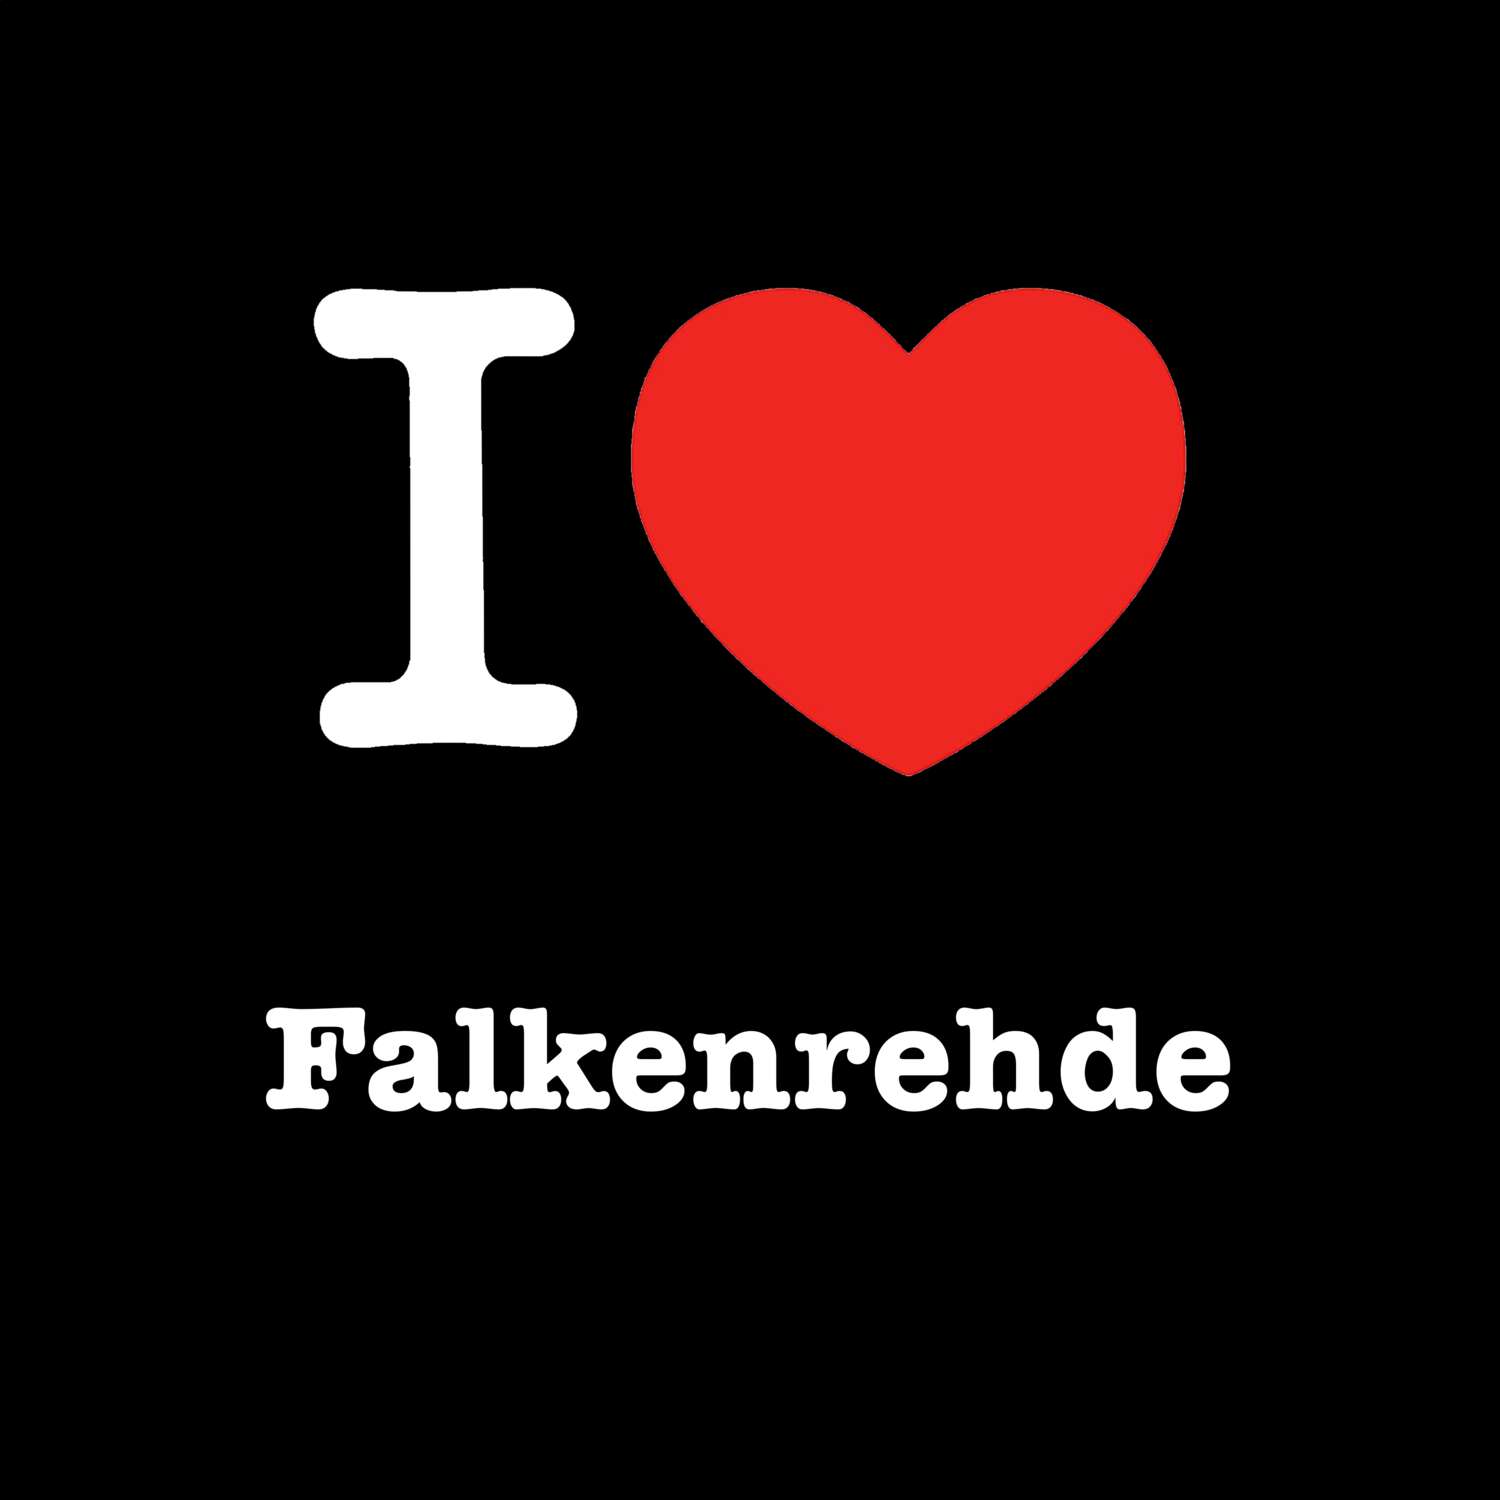 Falkenrehde T-Shirt »I love«